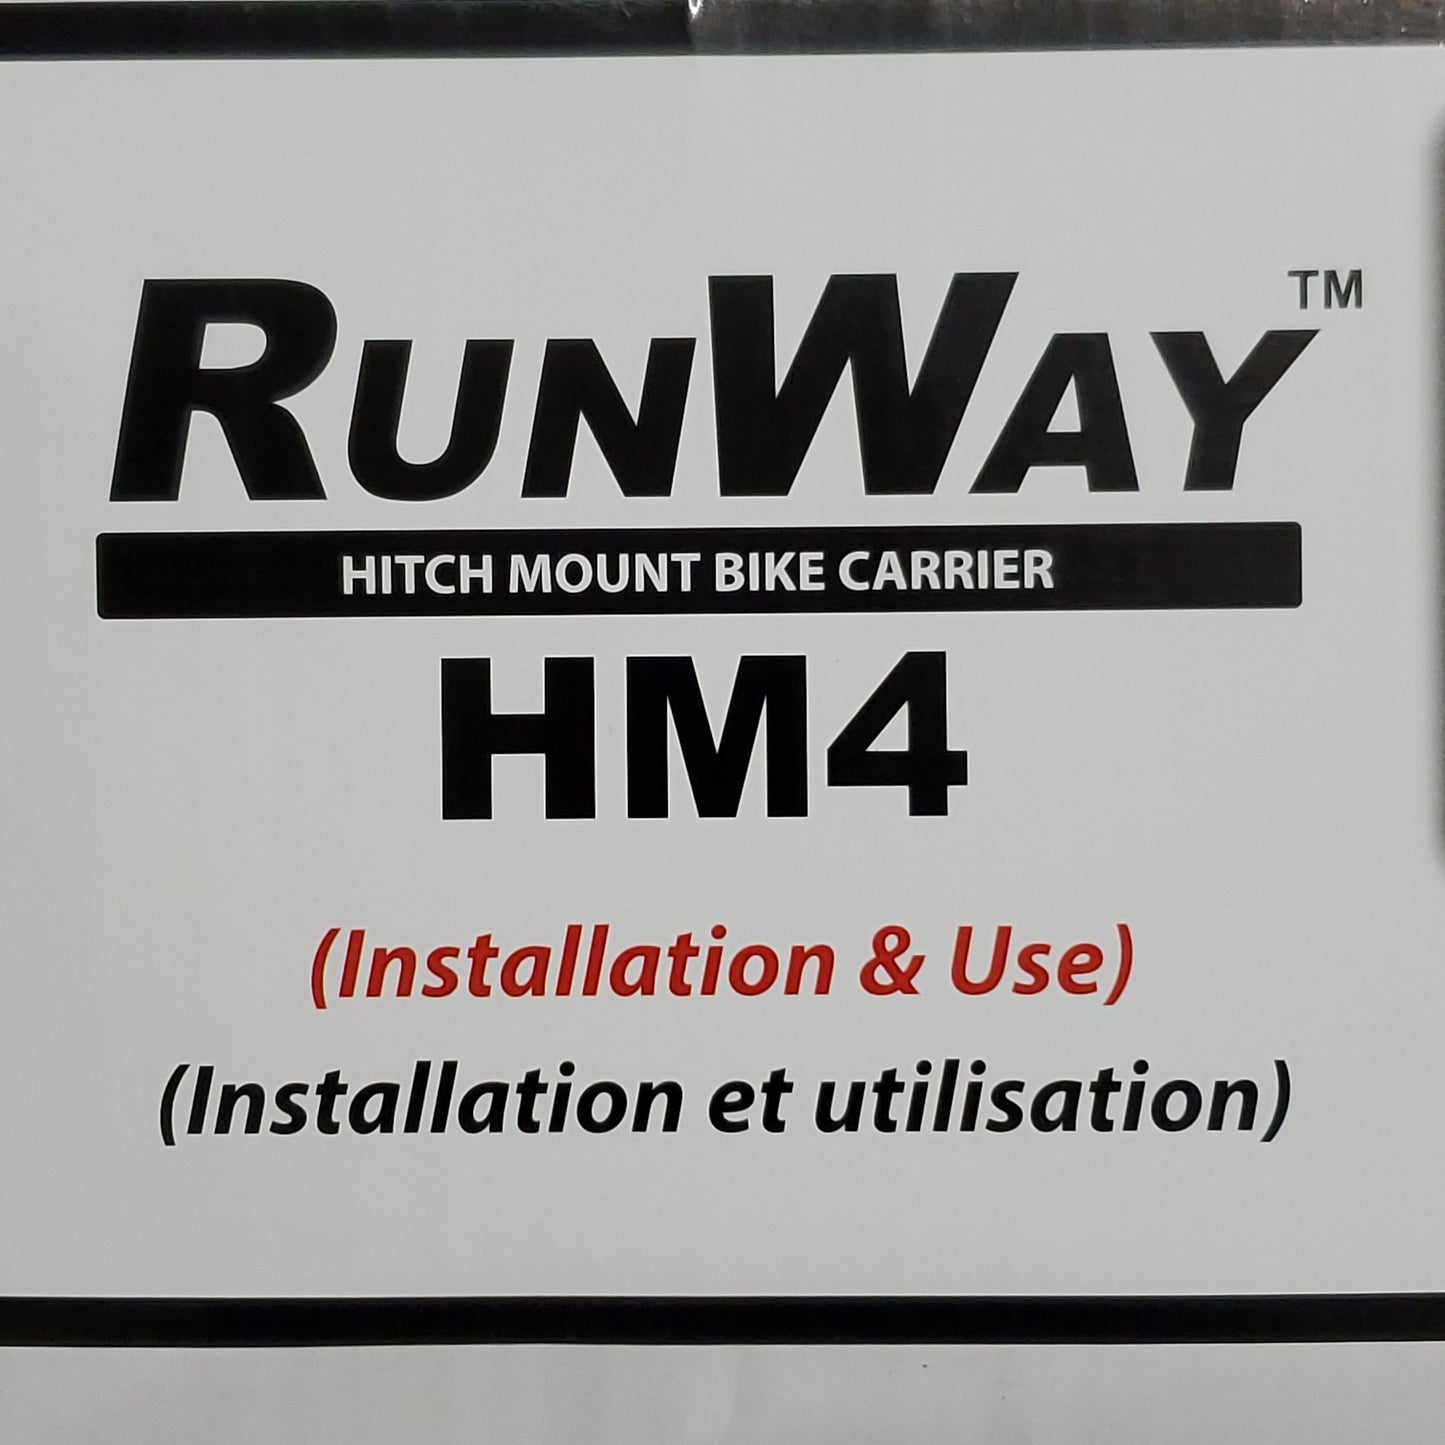 MALONE Runway Hm4 Hitch Mount Platform 4 Bike Carrier MPG2137 (New)